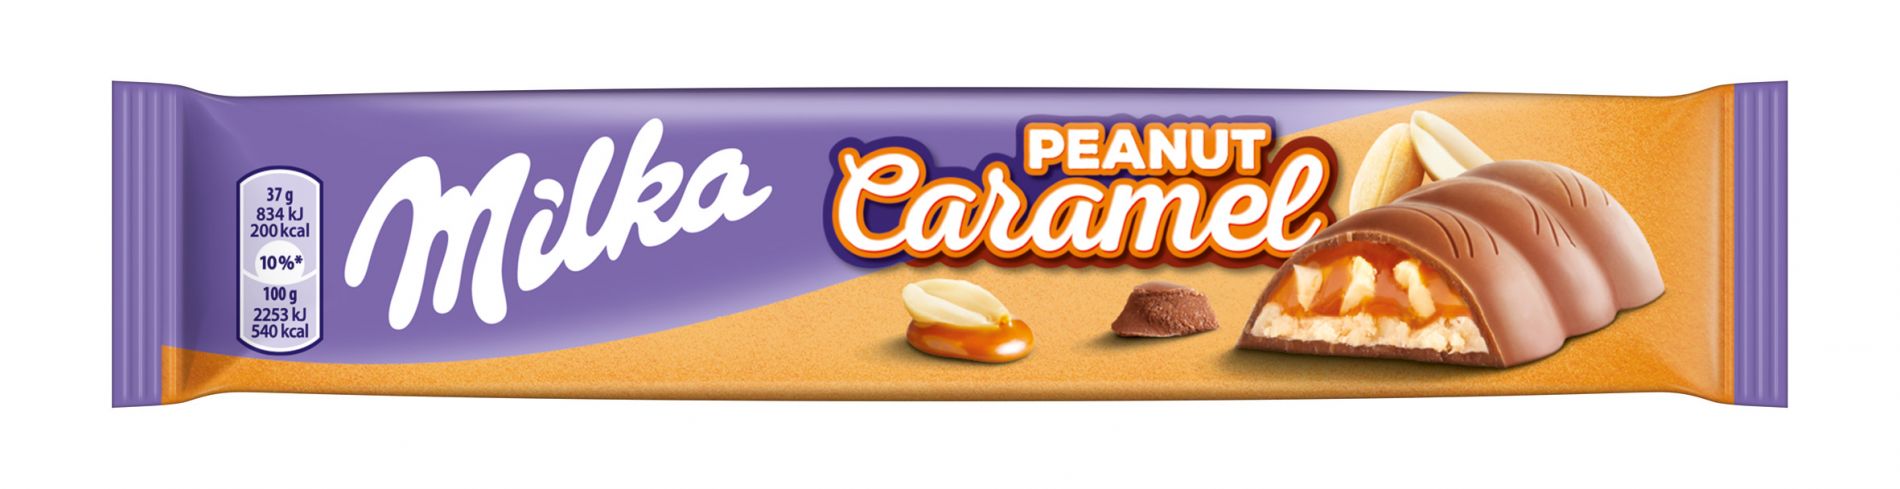 Milka Peanut Caramel _single čelní_300dpi_7622210785770